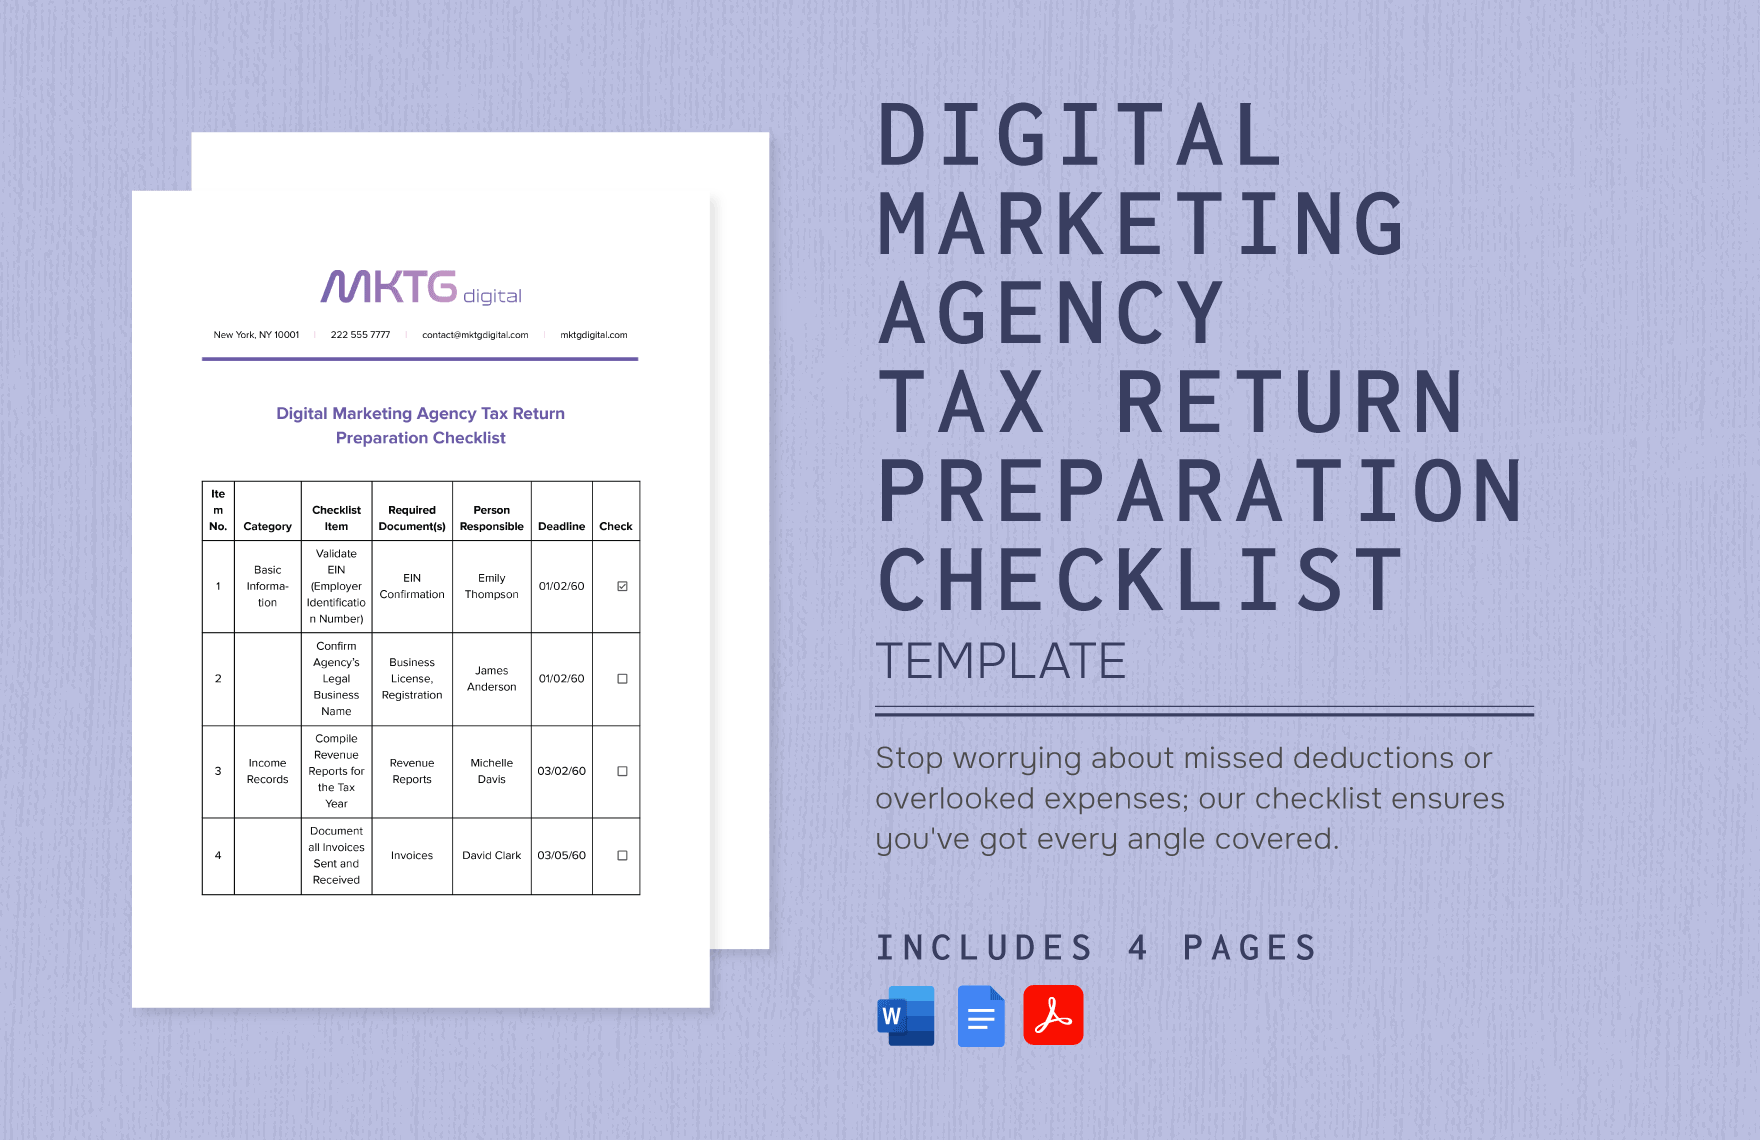 Digital Marketing Agency Tax Return Preparation Checklist Template in Word, Google Docs, PDF